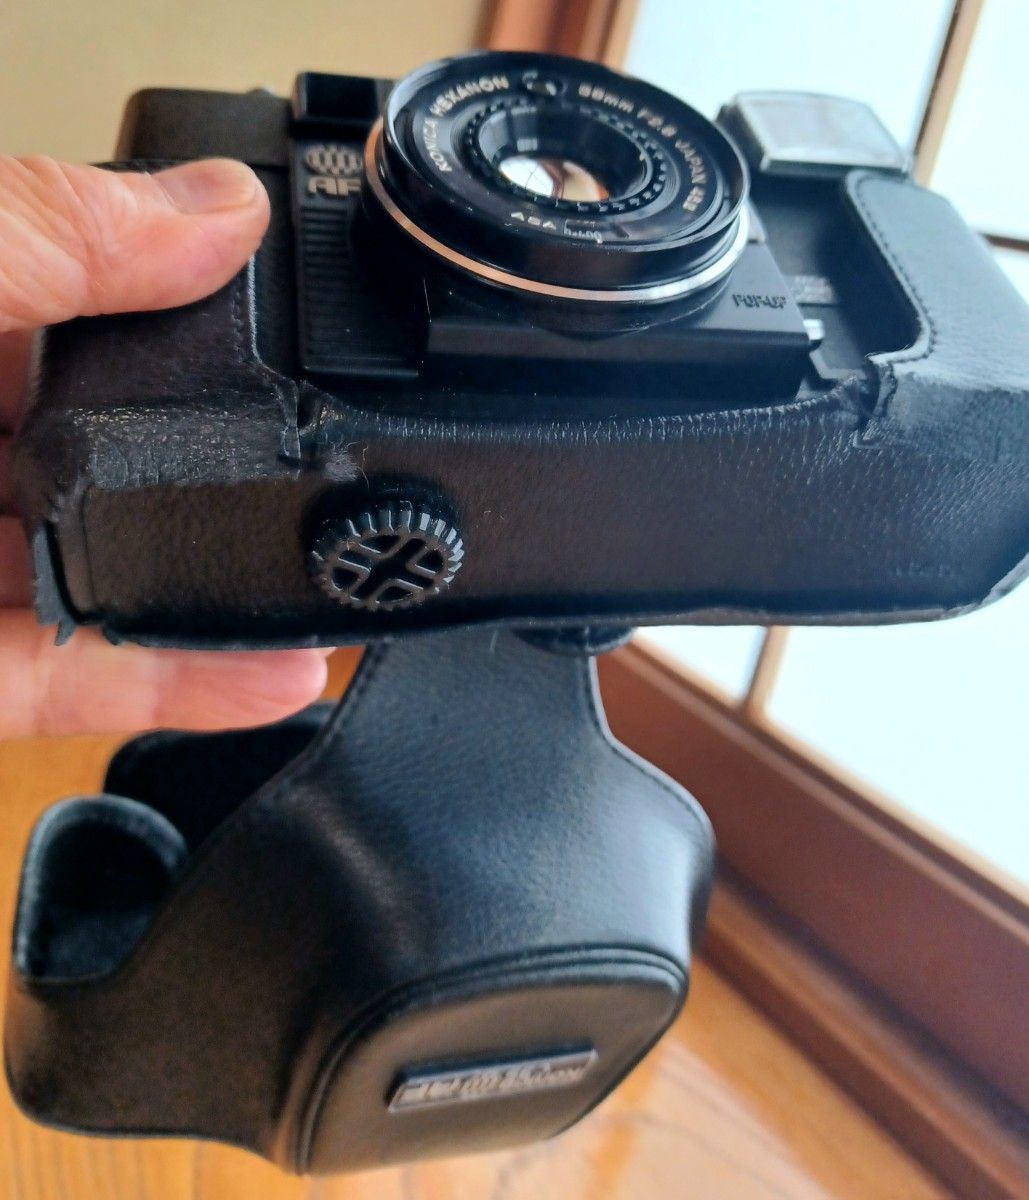 KONICAコニカC35AFフィルムコンパクトカメラ 使用説明書とケース、レンズ蓋付き中古 132×76×54mm 375g電池別